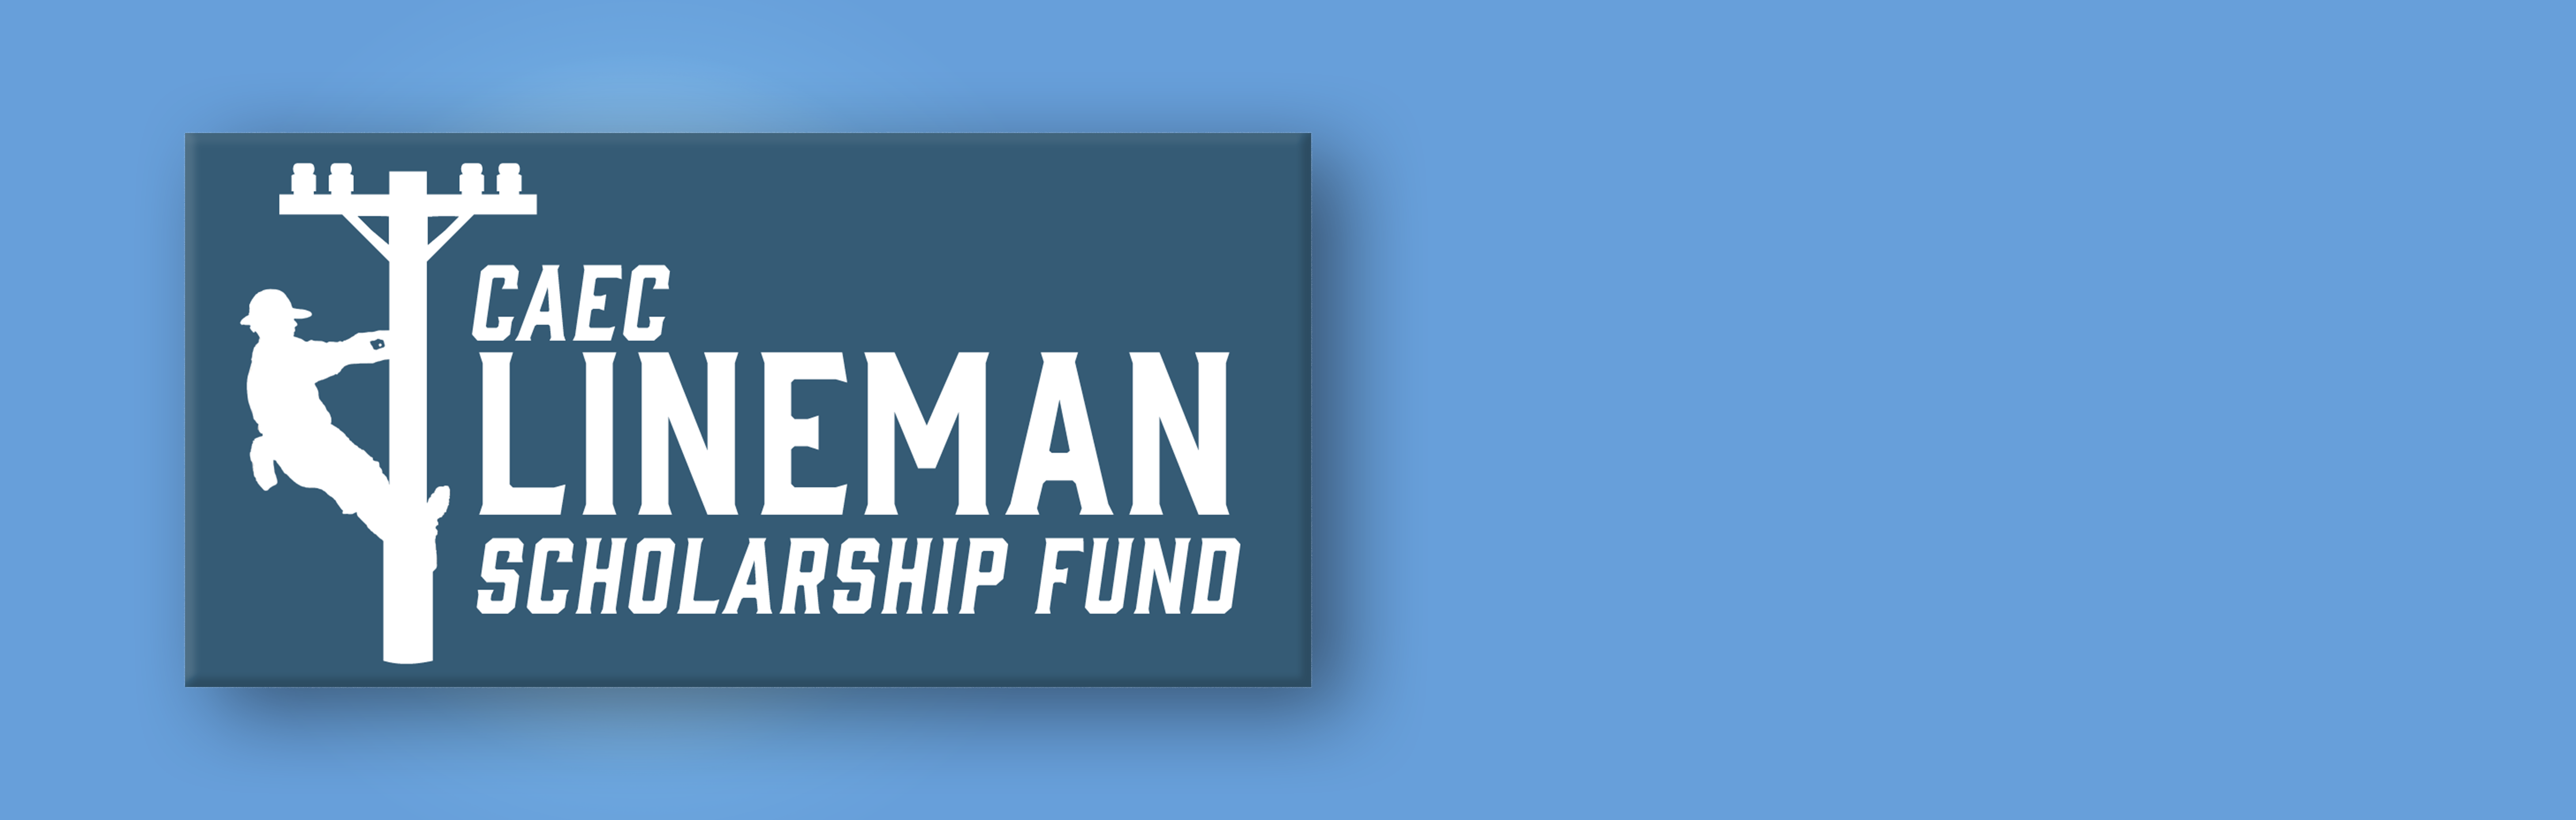 CAEC Lineman Scholarship Fund